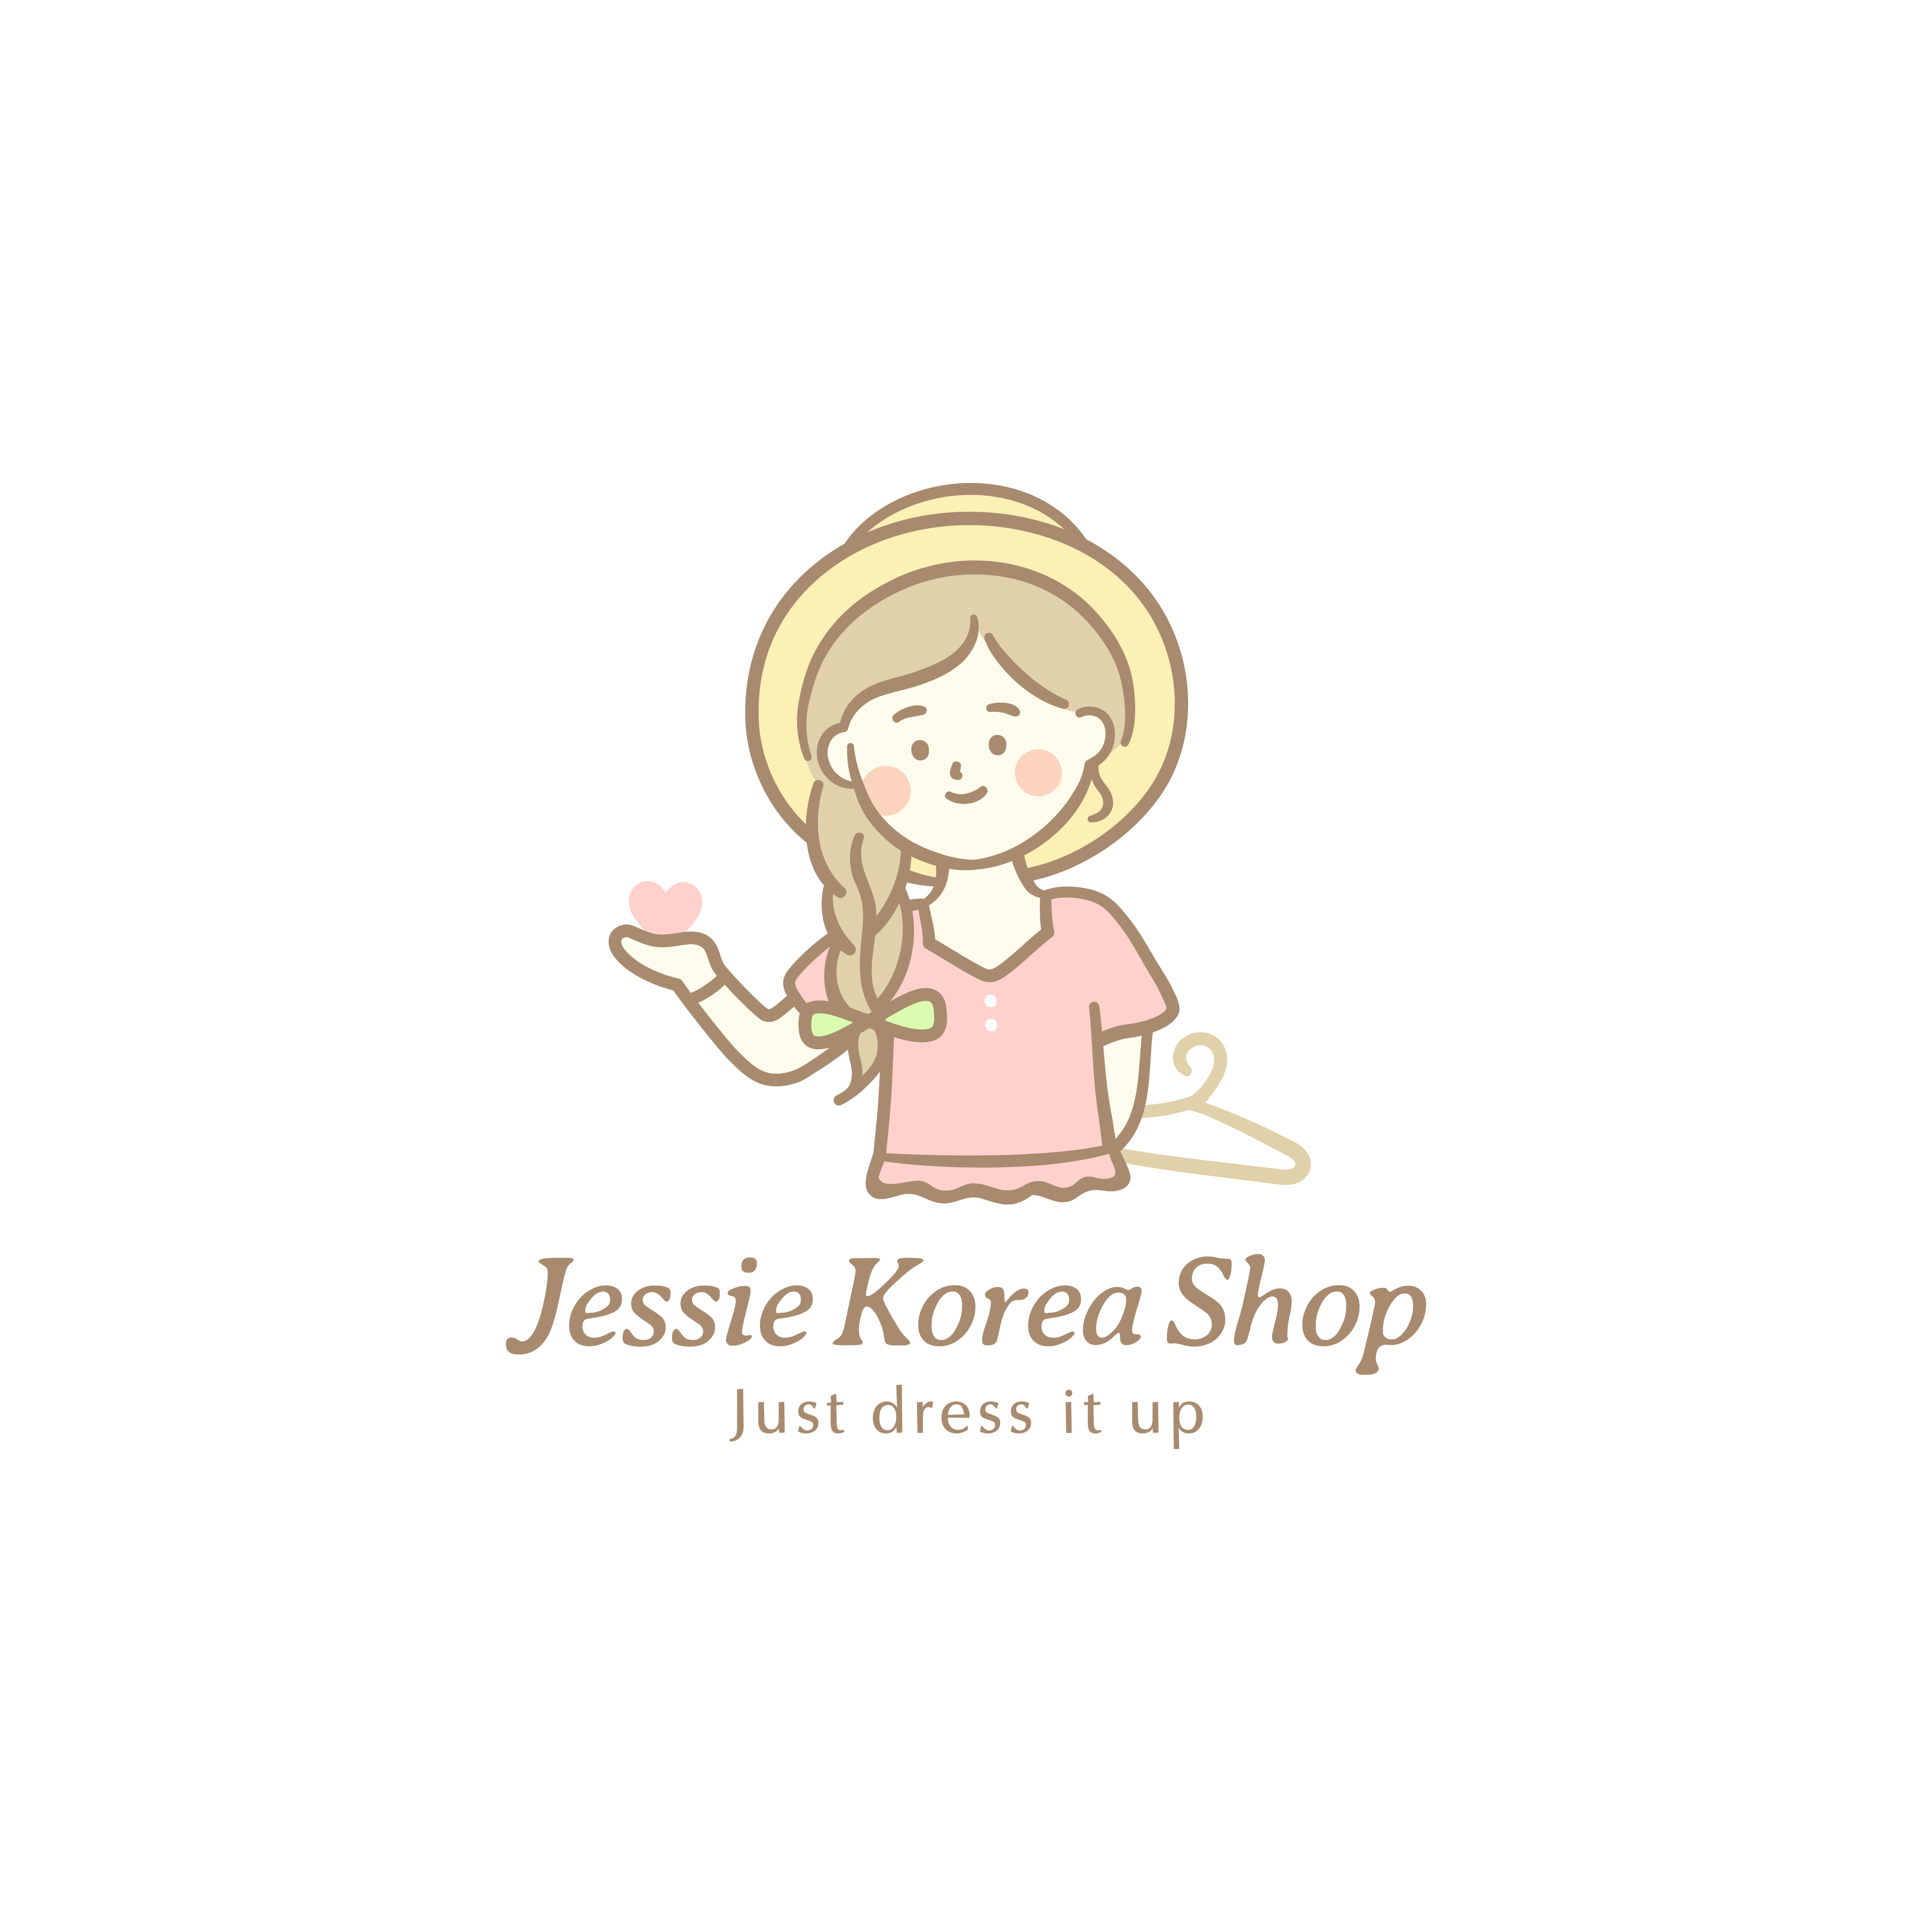 Jessie Korea Shop